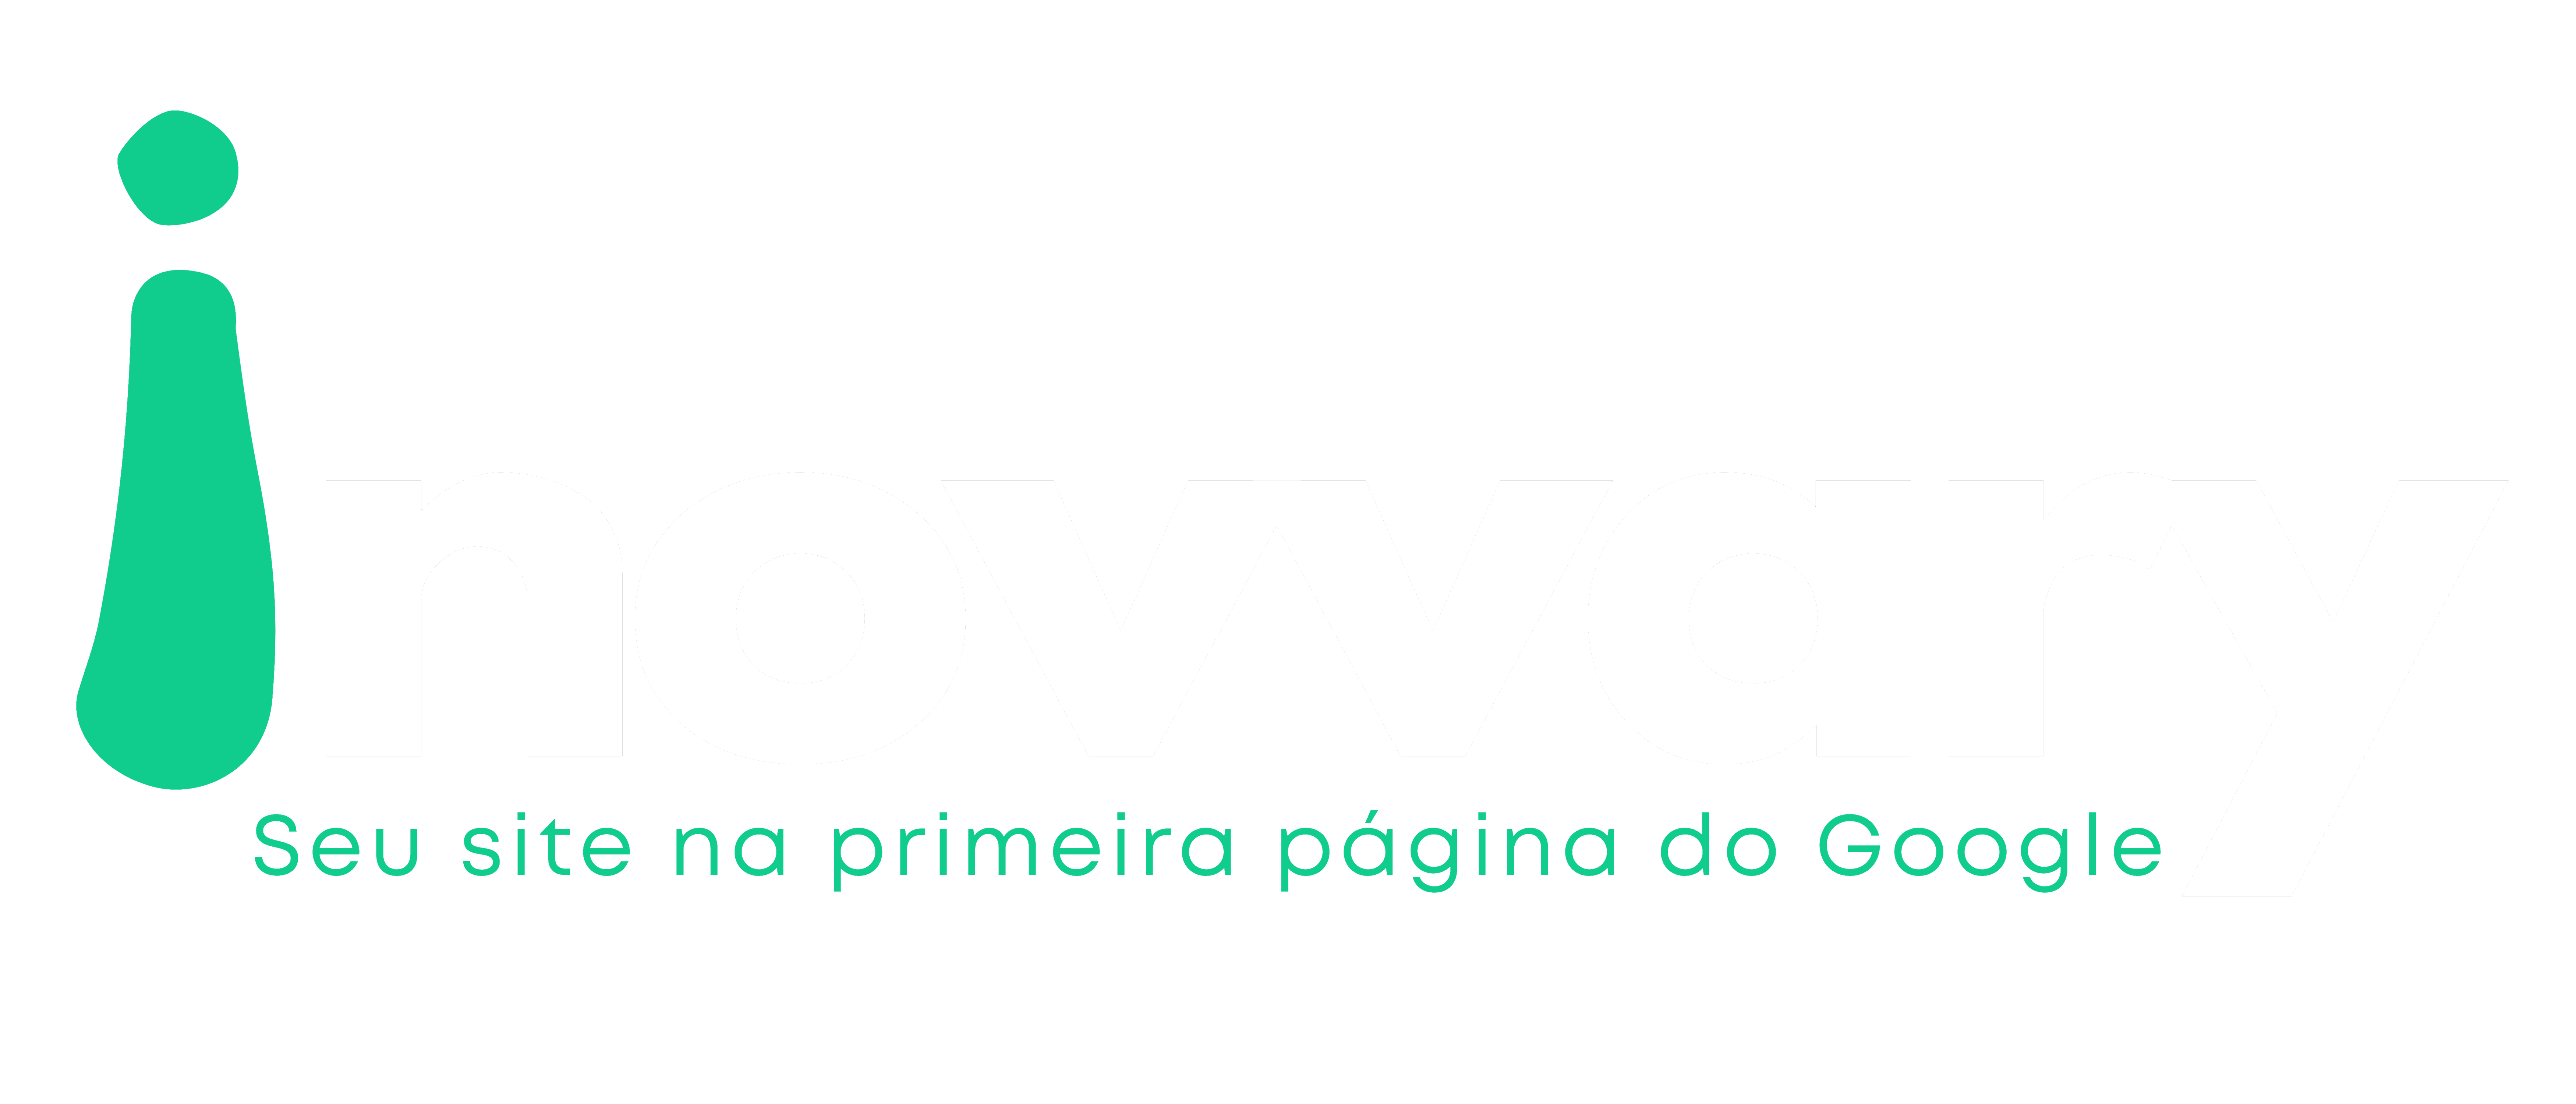 Logo da empresa Inovvary